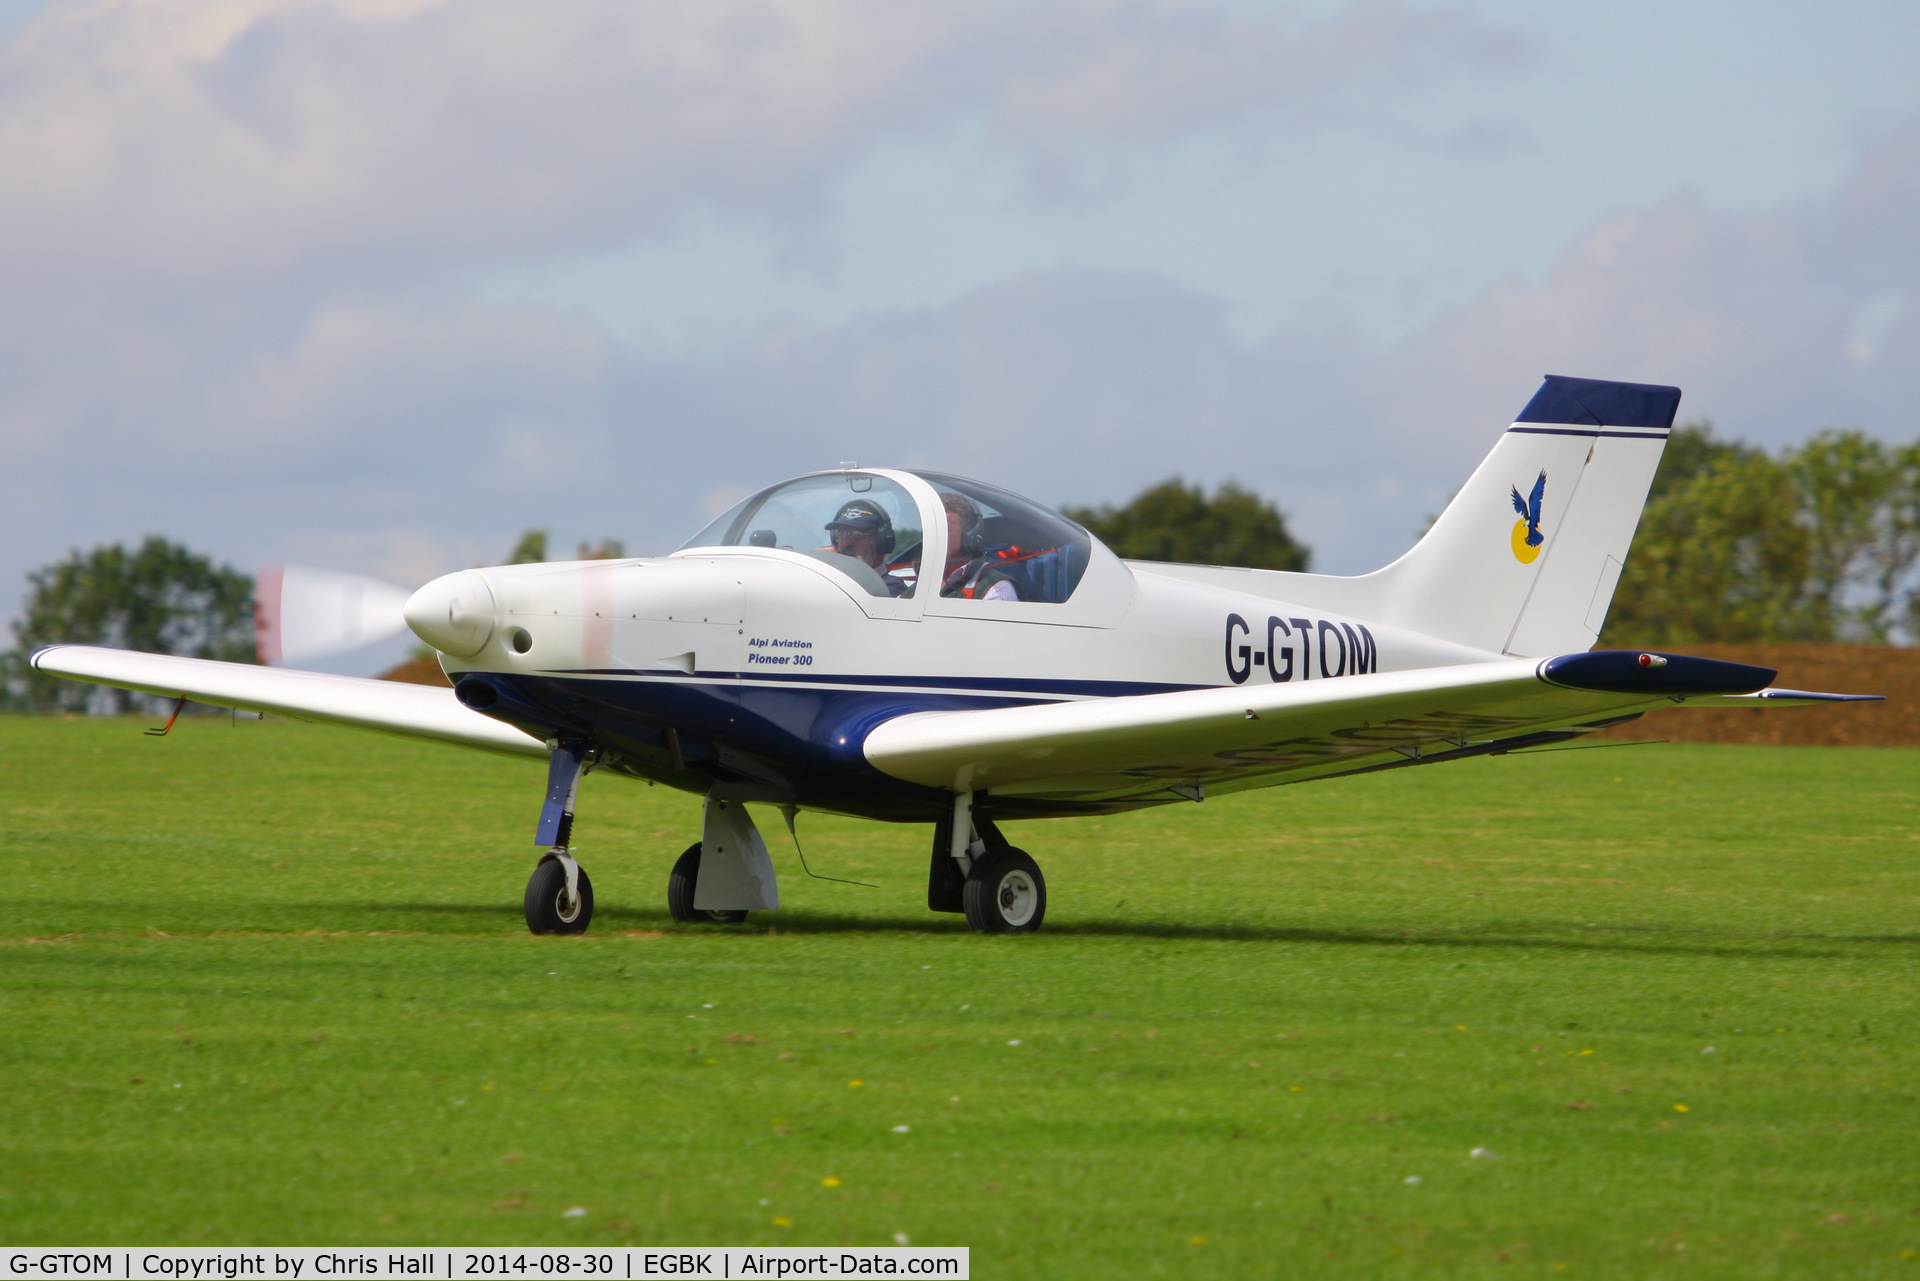 G-GTOM, 2008 Alpi Aviation Pioneer 300 C/N LAA 330-14795, at the LAA Rally 2014, Sywell